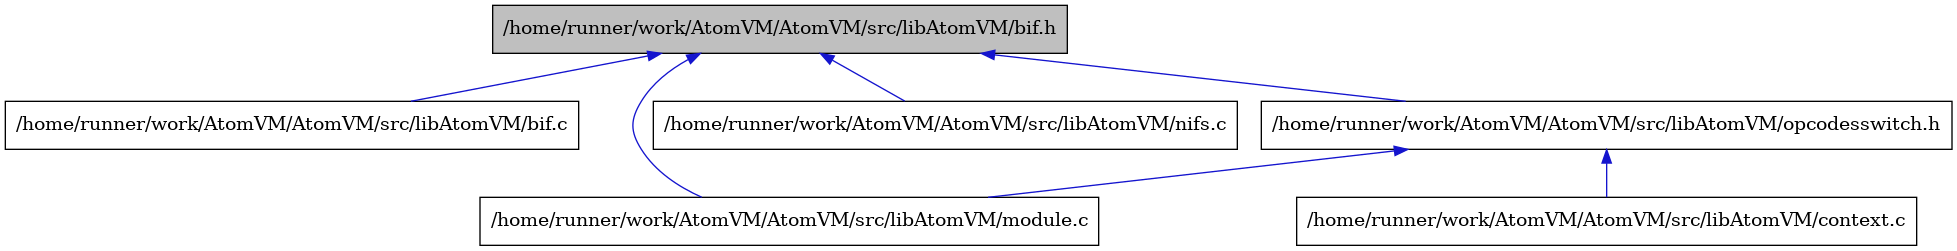 digraph {
    graph [bgcolor="#00000000"]
    node [shape=rectangle style=filled fillcolor="#FFFFFF" font=Helvetica padding=2]
    edge [color="#1414CE"]
    "2" [label="/home/runner/work/AtomVM/AtomVM/src/libAtomVM/bif.c" tooltip="/home/runner/work/AtomVM/AtomVM/src/libAtomVM/bif.c"]
    "1" [label="/home/runner/work/AtomVM/AtomVM/src/libAtomVM/bif.h" tooltip="/home/runner/work/AtomVM/AtomVM/src/libAtomVM/bif.h" fillcolor="#BFBFBF"]
    "6" [label="/home/runner/work/AtomVM/AtomVM/src/libAtomVM/context.c" tooltip="/home/runner/work/AtomVM/AtomVM/src/libAtomVM/context.c"]
    "3" [label="/home/runner/work/AtomVM/AtomVM/src/libAtomVM/module.c" tooltip="/home/runner/work/AtomVM/AtomVM/src/libAtomVM/module.c"]
    "4" [label="/home/runner/work/AtomVM/AtomVM/src/libAtomVM/nifs.c" tooltip="/home/runner/work/AtomVM/AtomVM/src/libAtomVM/nifs.c"]
    "5" [label="/home/runner/work/AtomVM/AtomVM/src/libAtomVM/opcodesswitch.h" tooltip="/home/runner/work/AtomVM/AtomVM/src/libAtomVM/opcodesswitch.h"]
    "1" -> "2" [dir=back tooltip="include"]
    "1" -> "3" [dir=back tooltip="include"]
    "1" -> "4" [dir=back tooltip="include"]
    "1" -> "5" [dir=back tooltip="include"]
    "5" -> "6" [dir=back tooltip="include"]
    "5" -> "3" [dir=back tooltip="include"]
}